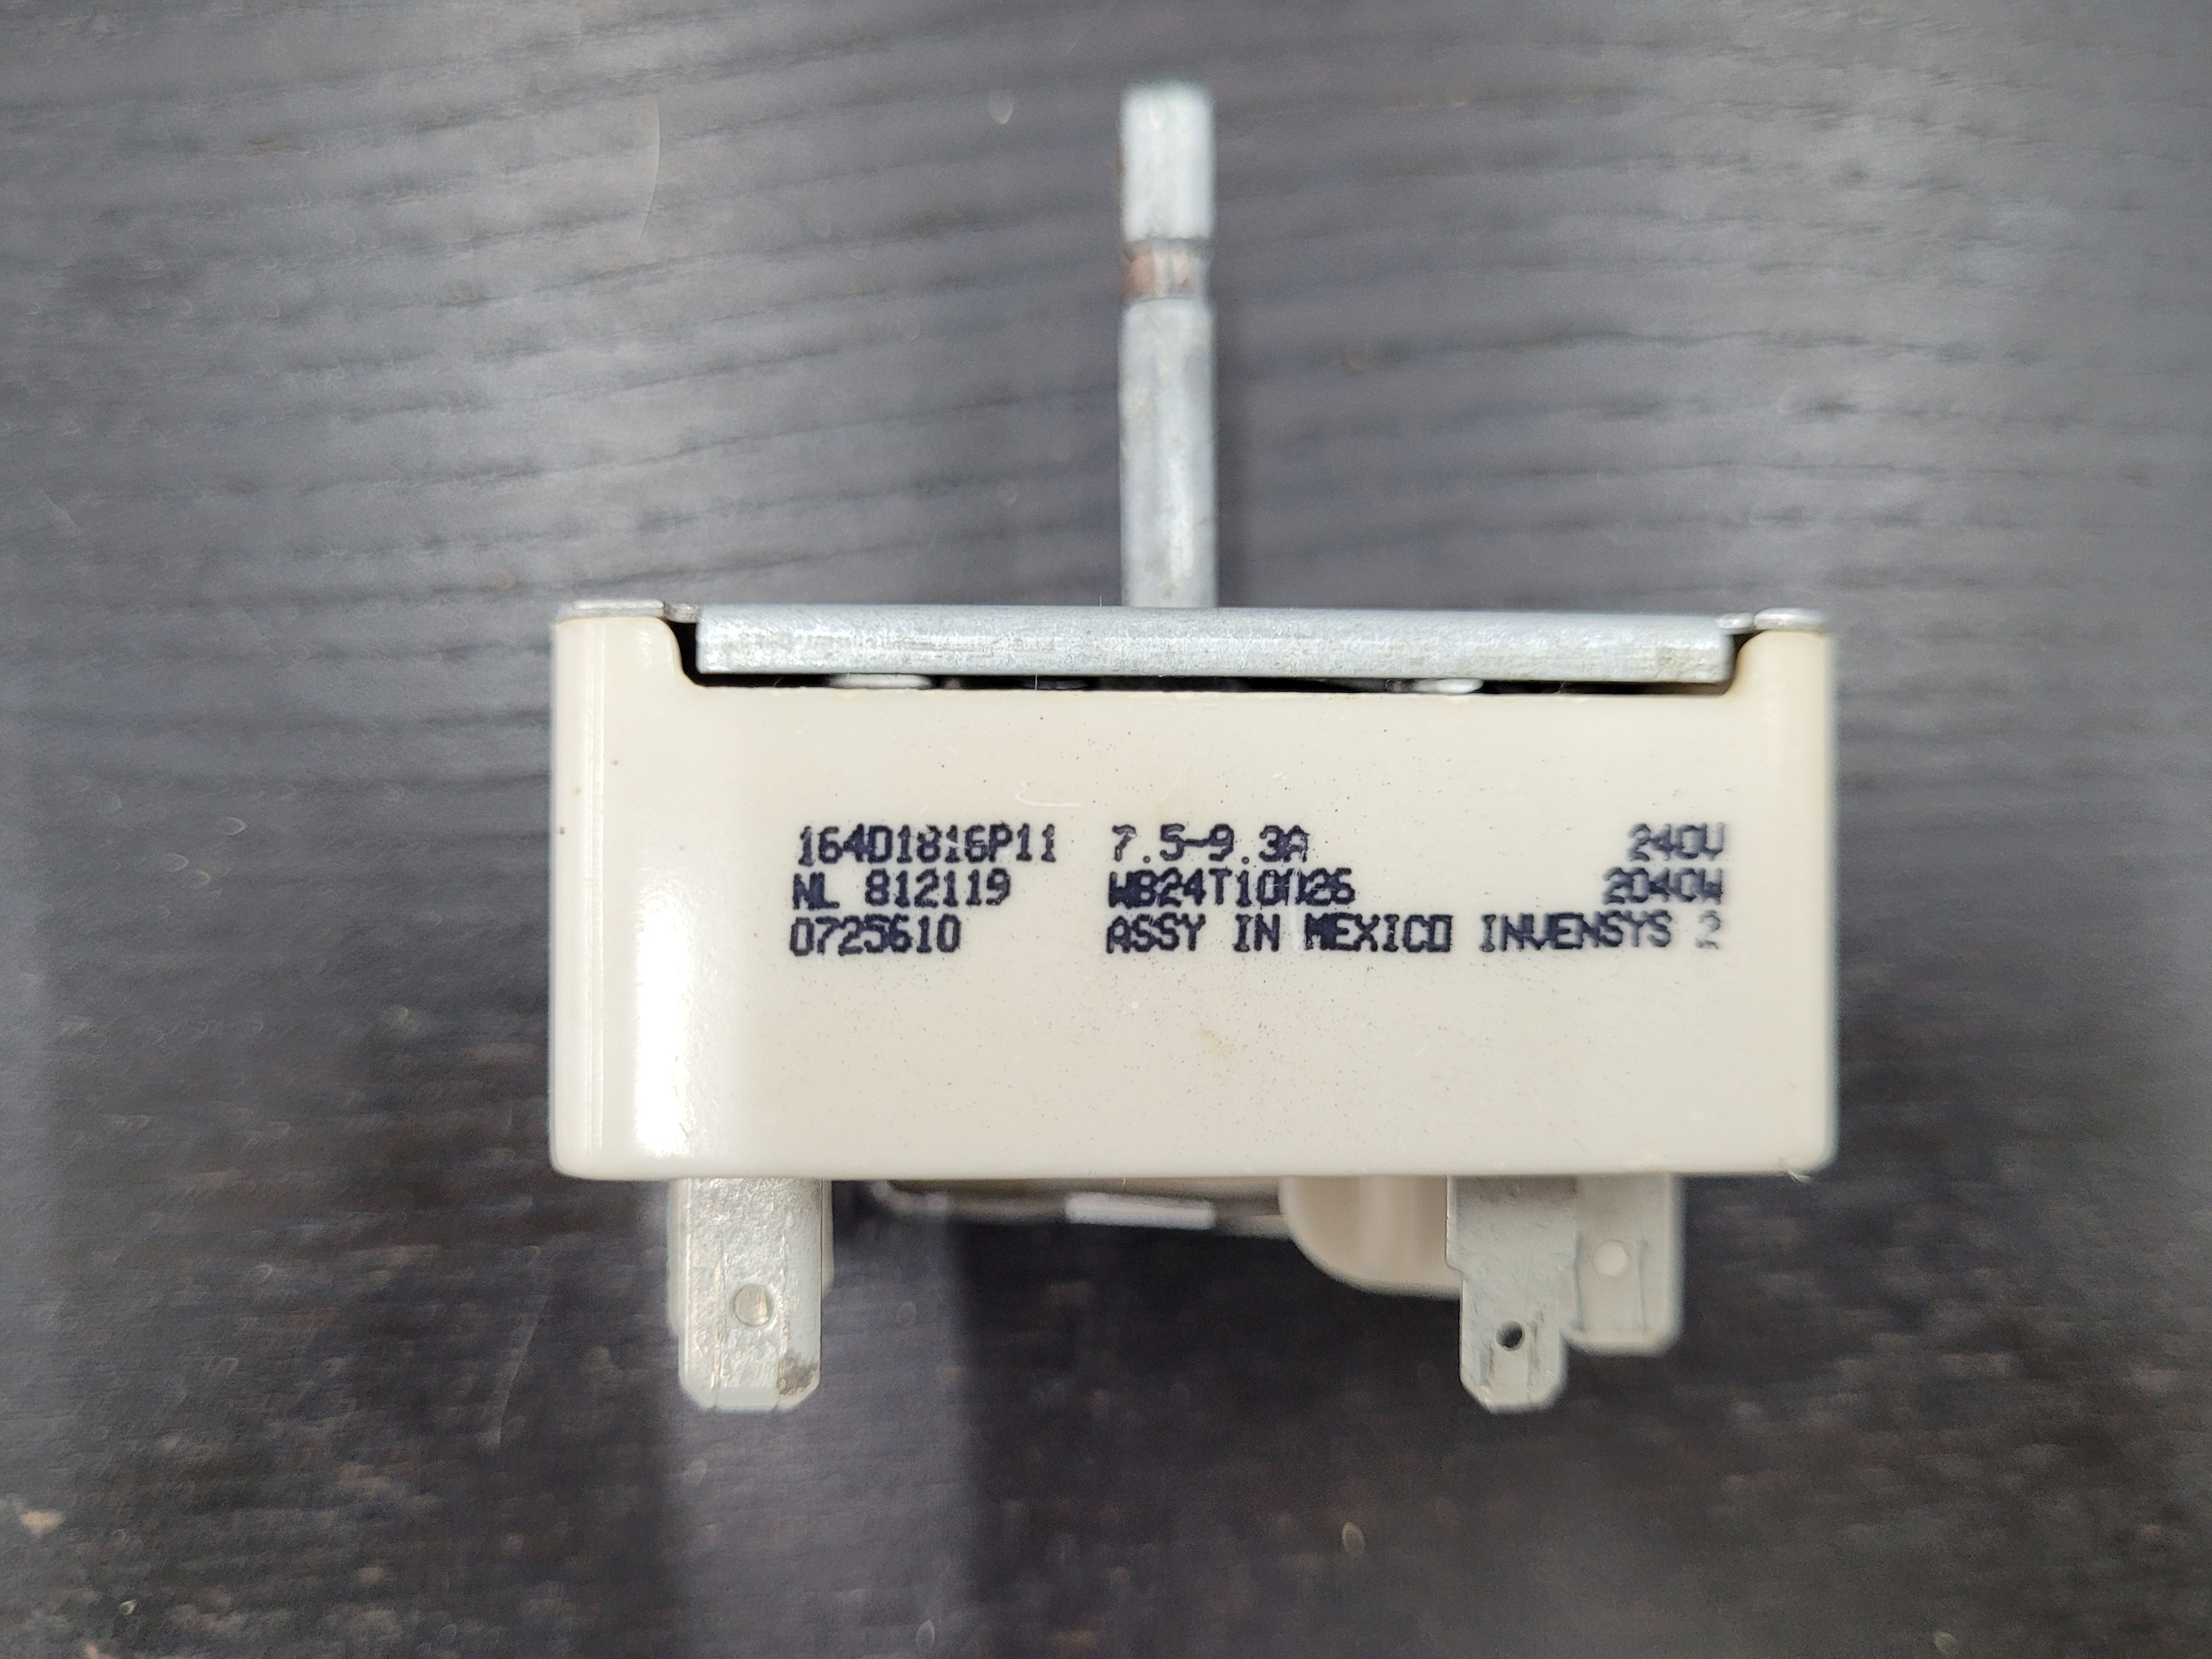 GE-Range-Surface-Element-Control-Switch-2000-watt-WB24T10026-164D1816P11